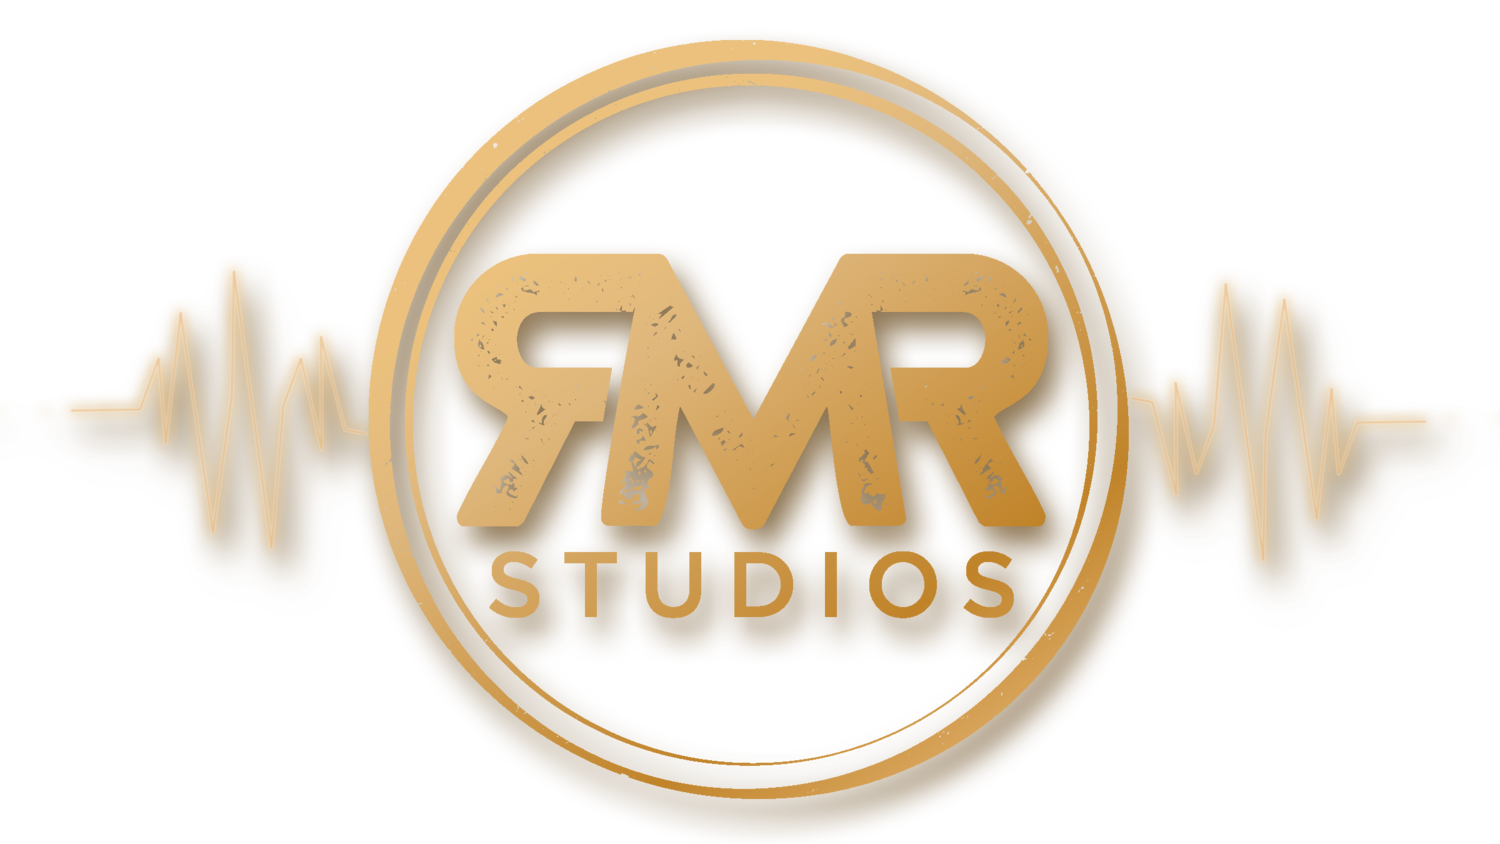 RMR Studios